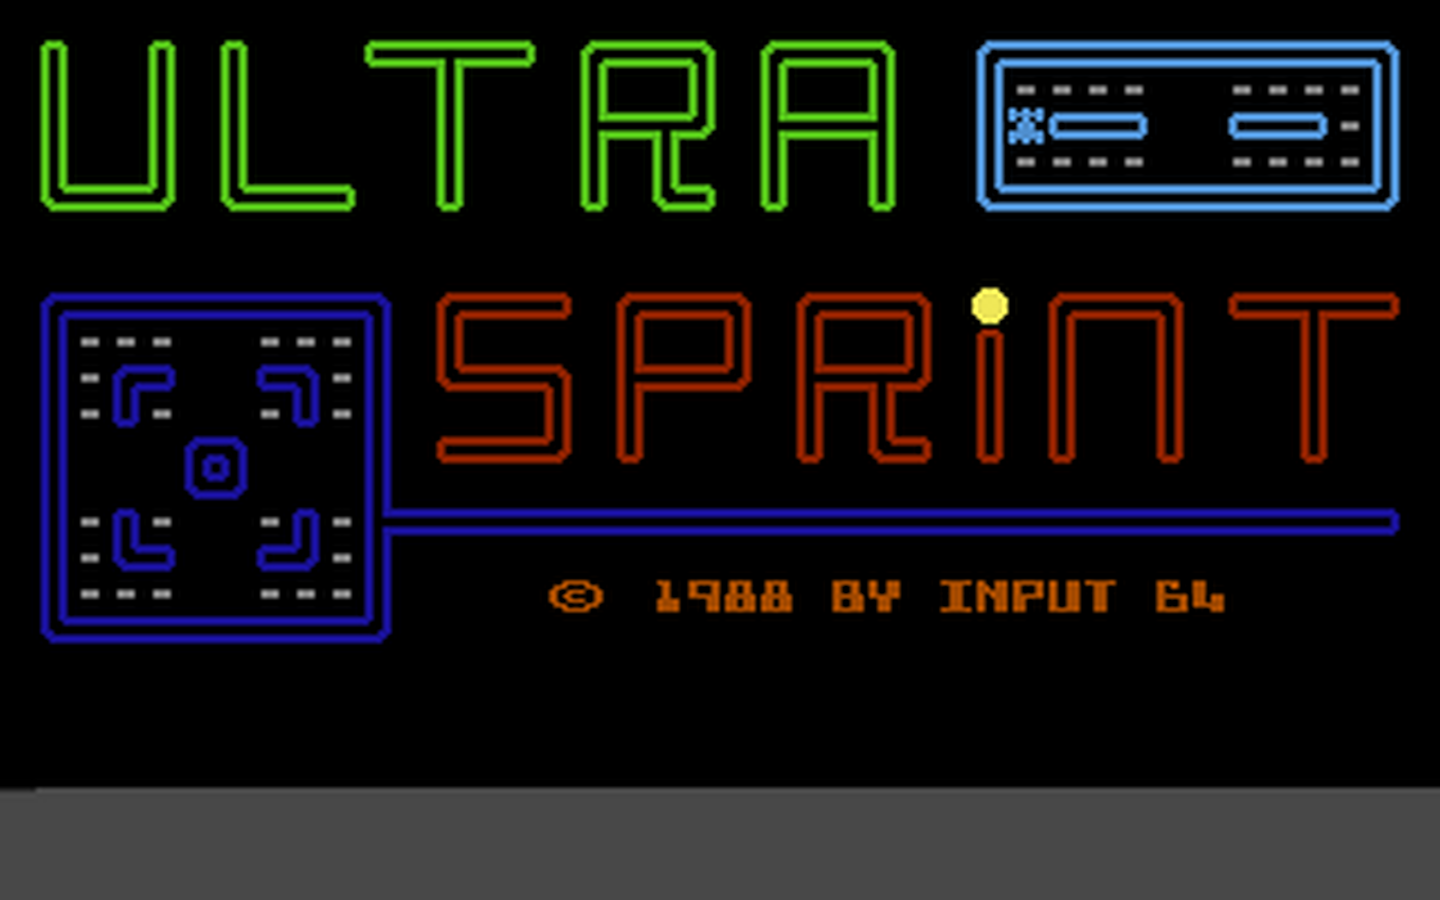 C64 GameBase Ultra_Sprint Verlag_Heinz_Heise_GmbH/Input_64 1988